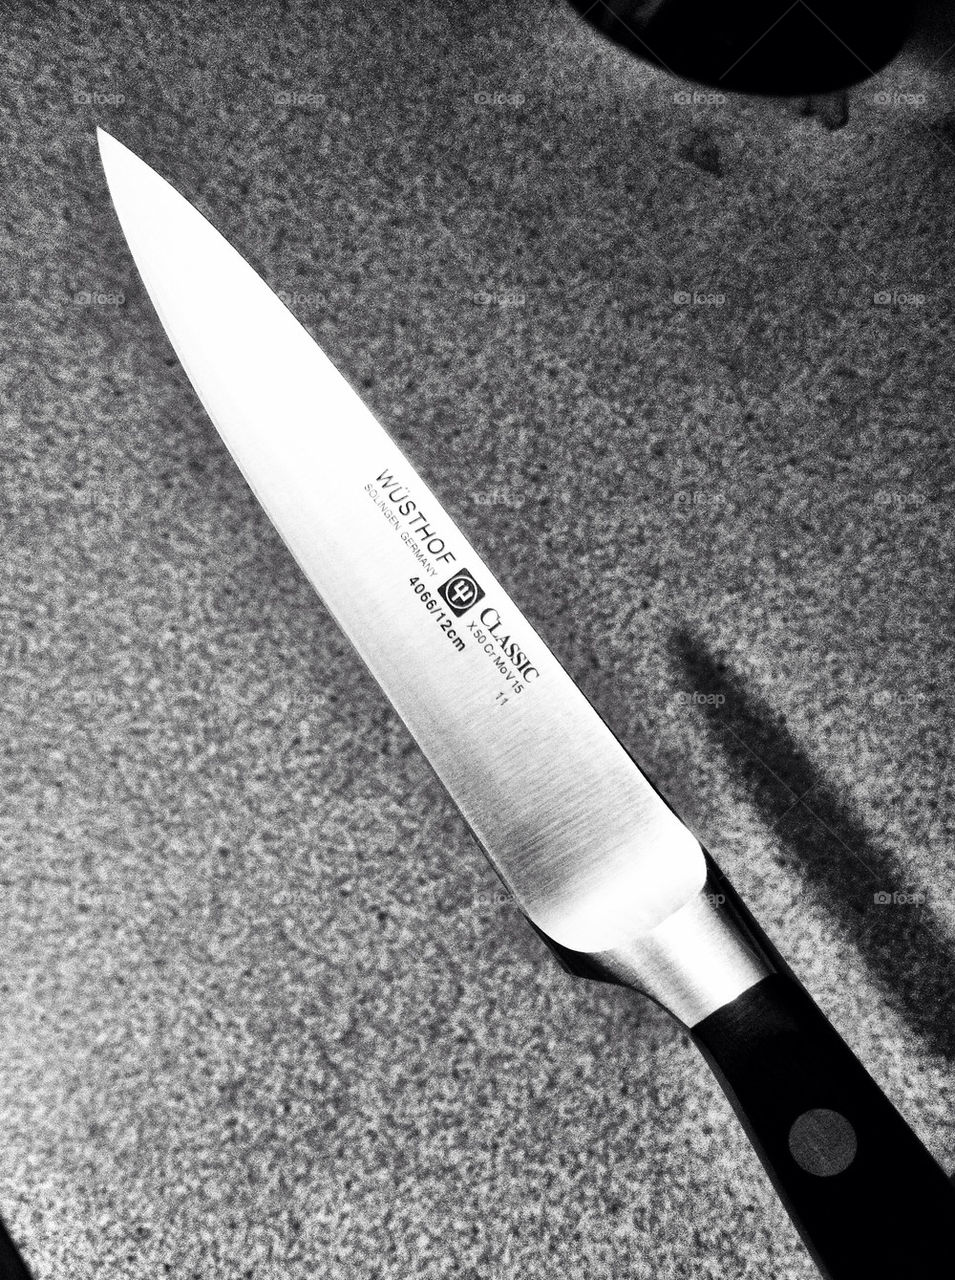 china metal knife bw by wmm1969